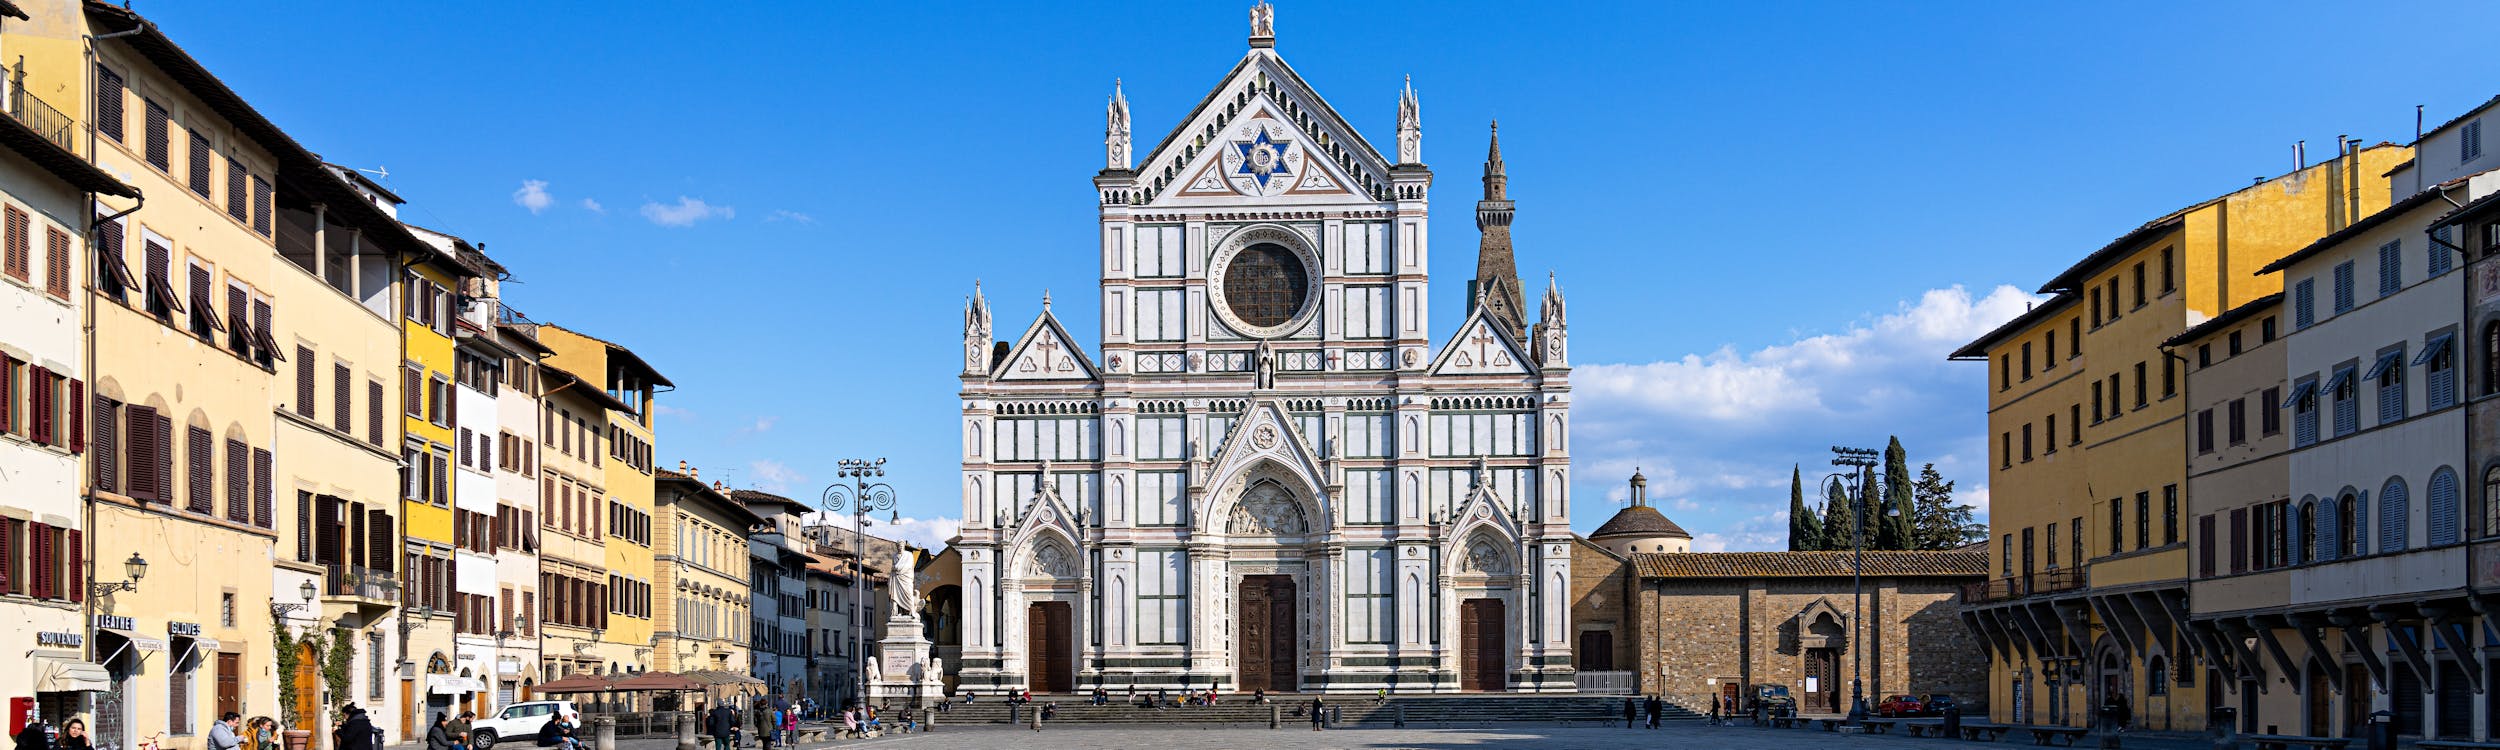 Stue selv bremse Santa Croce, Florence, Italy - Santa Croce